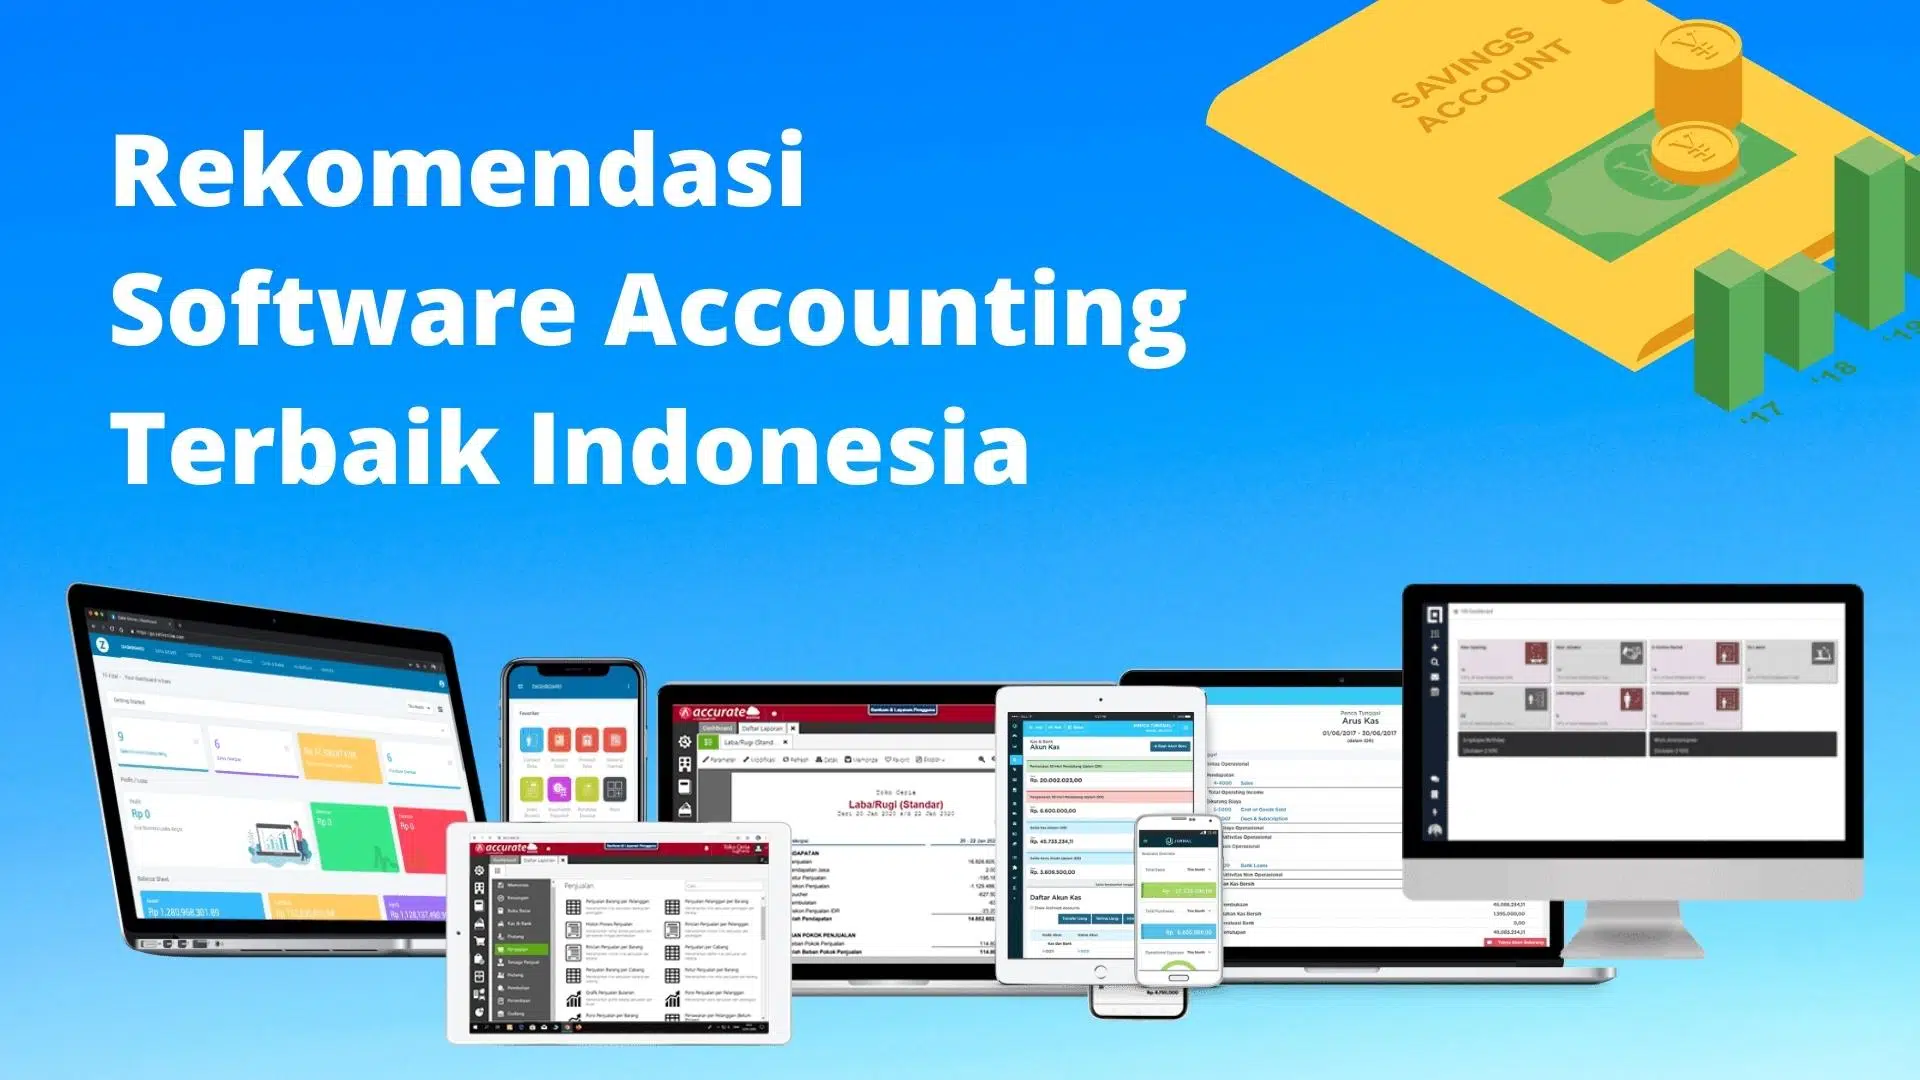 Software accounting